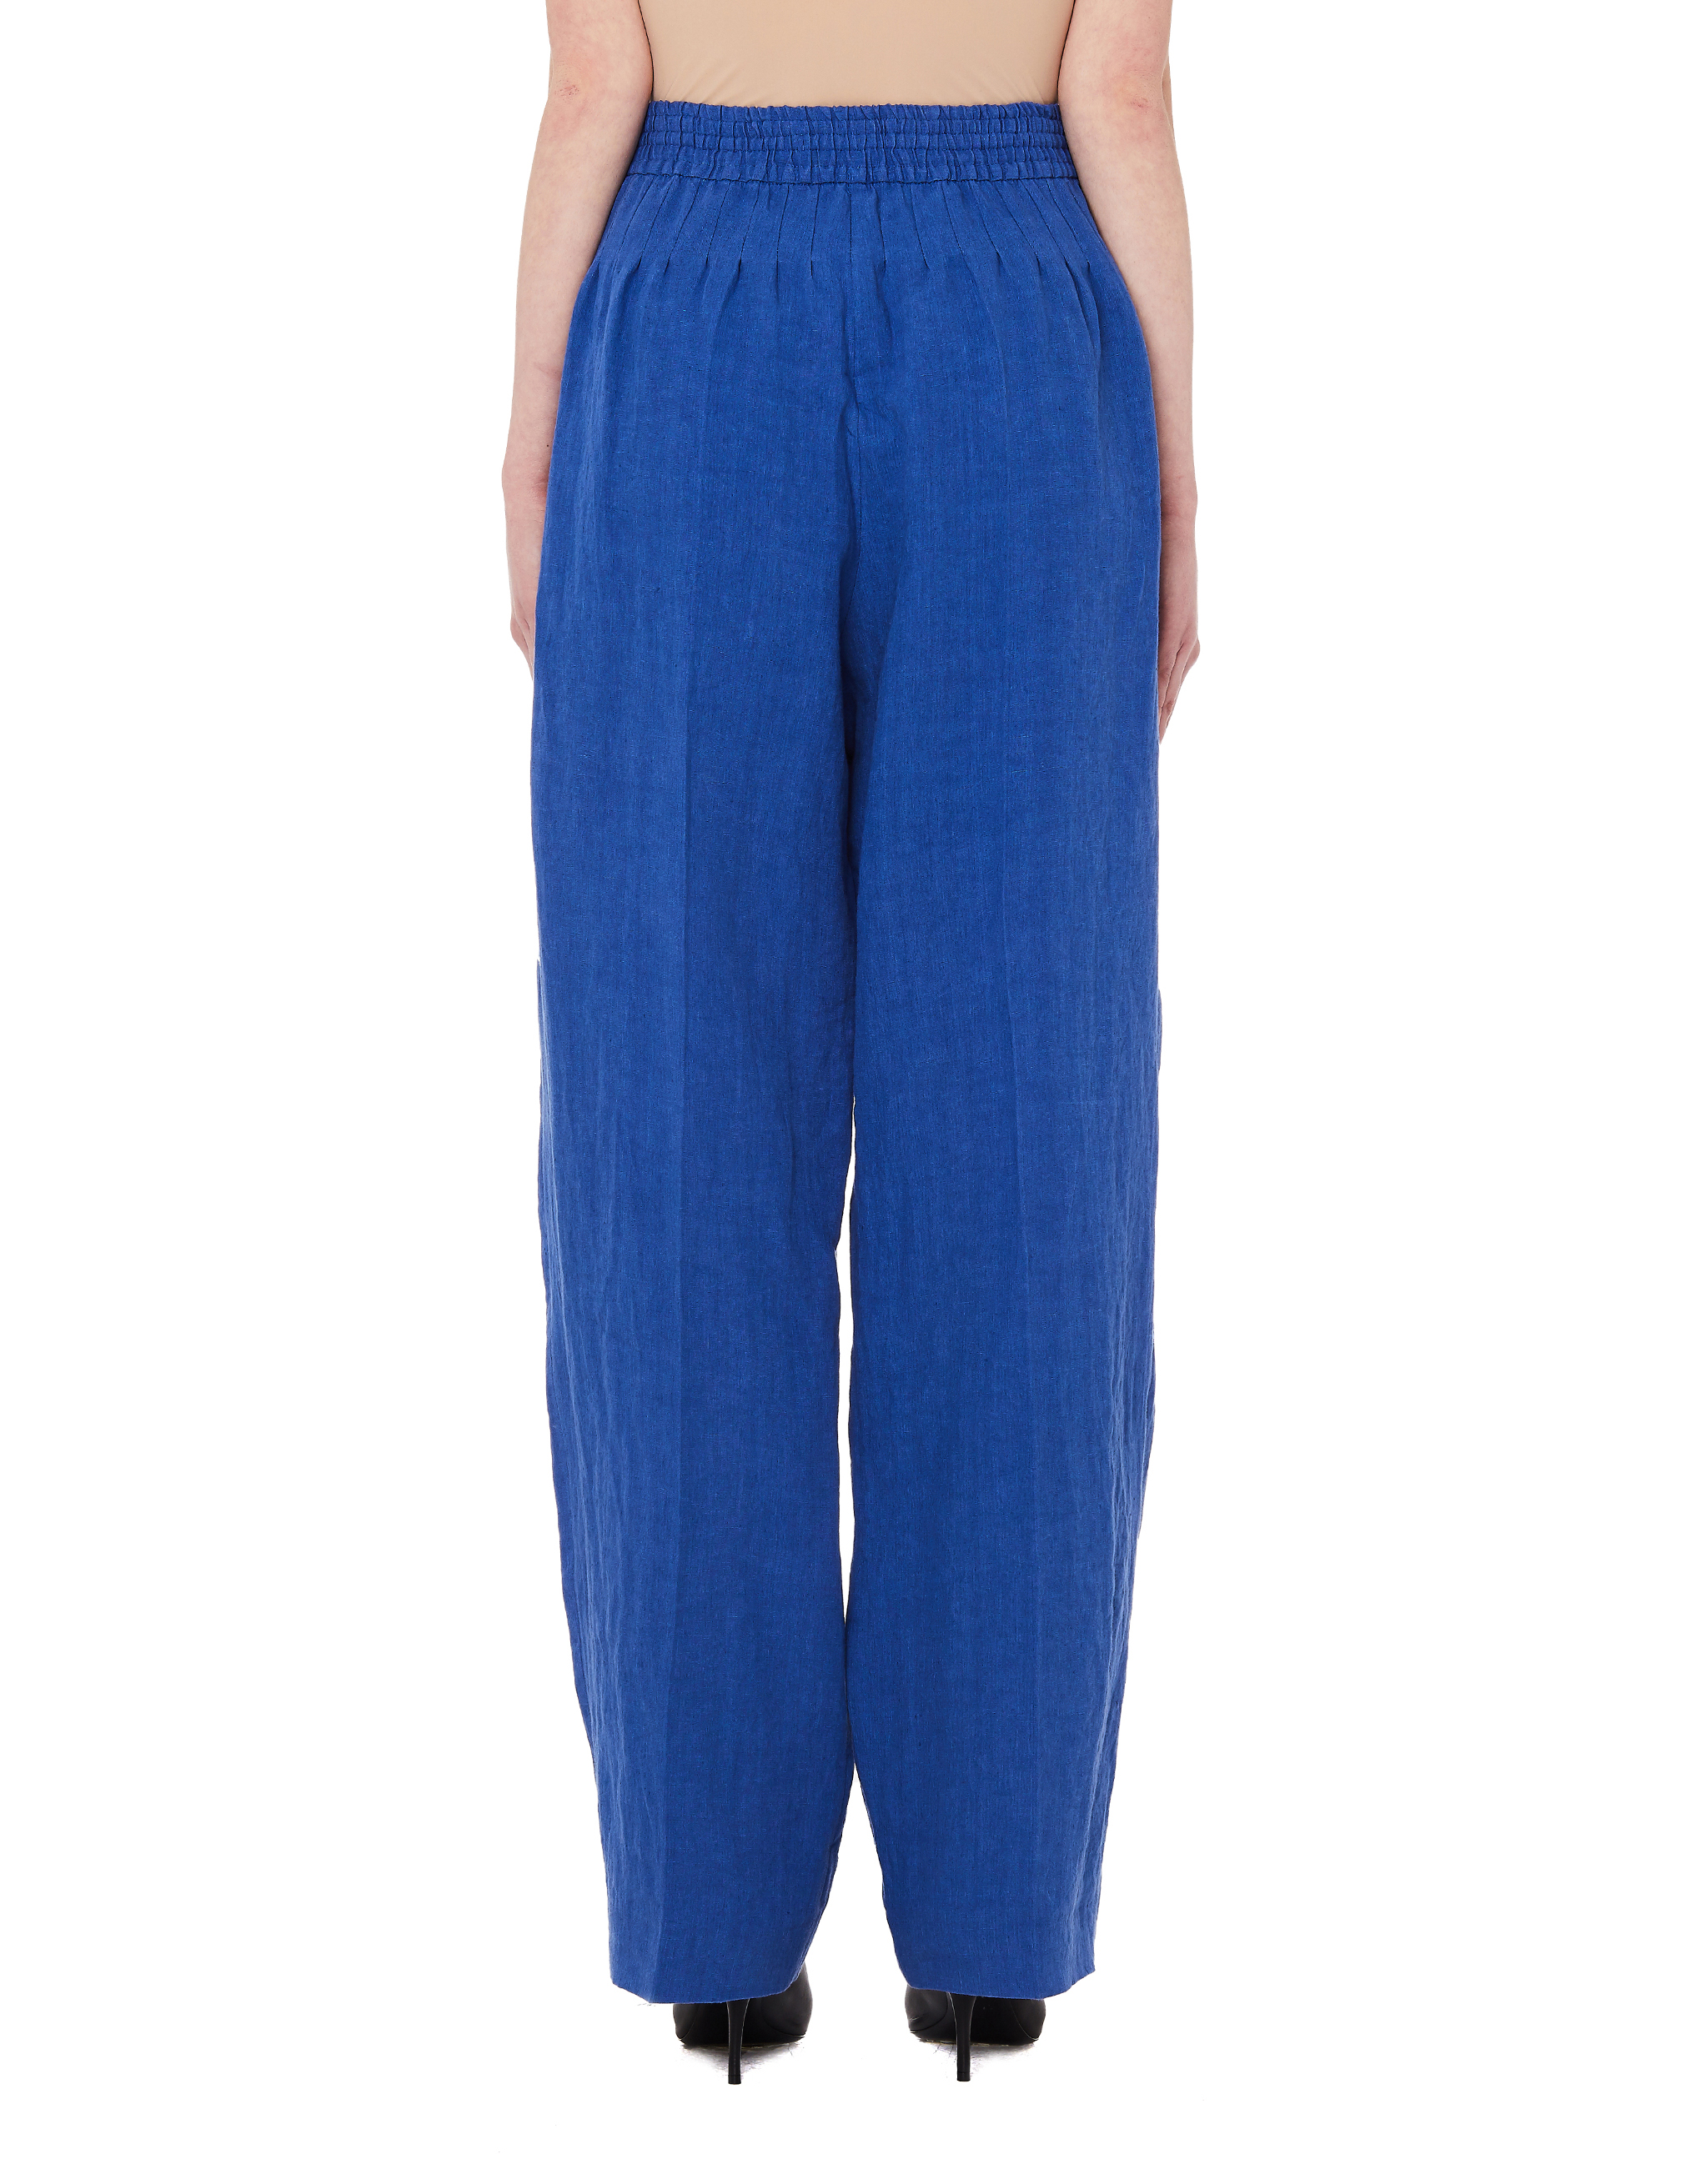 Синие брюки из хлопка и льна Haider Ackermann 193-5404-166-046, размер 38 - фото 3